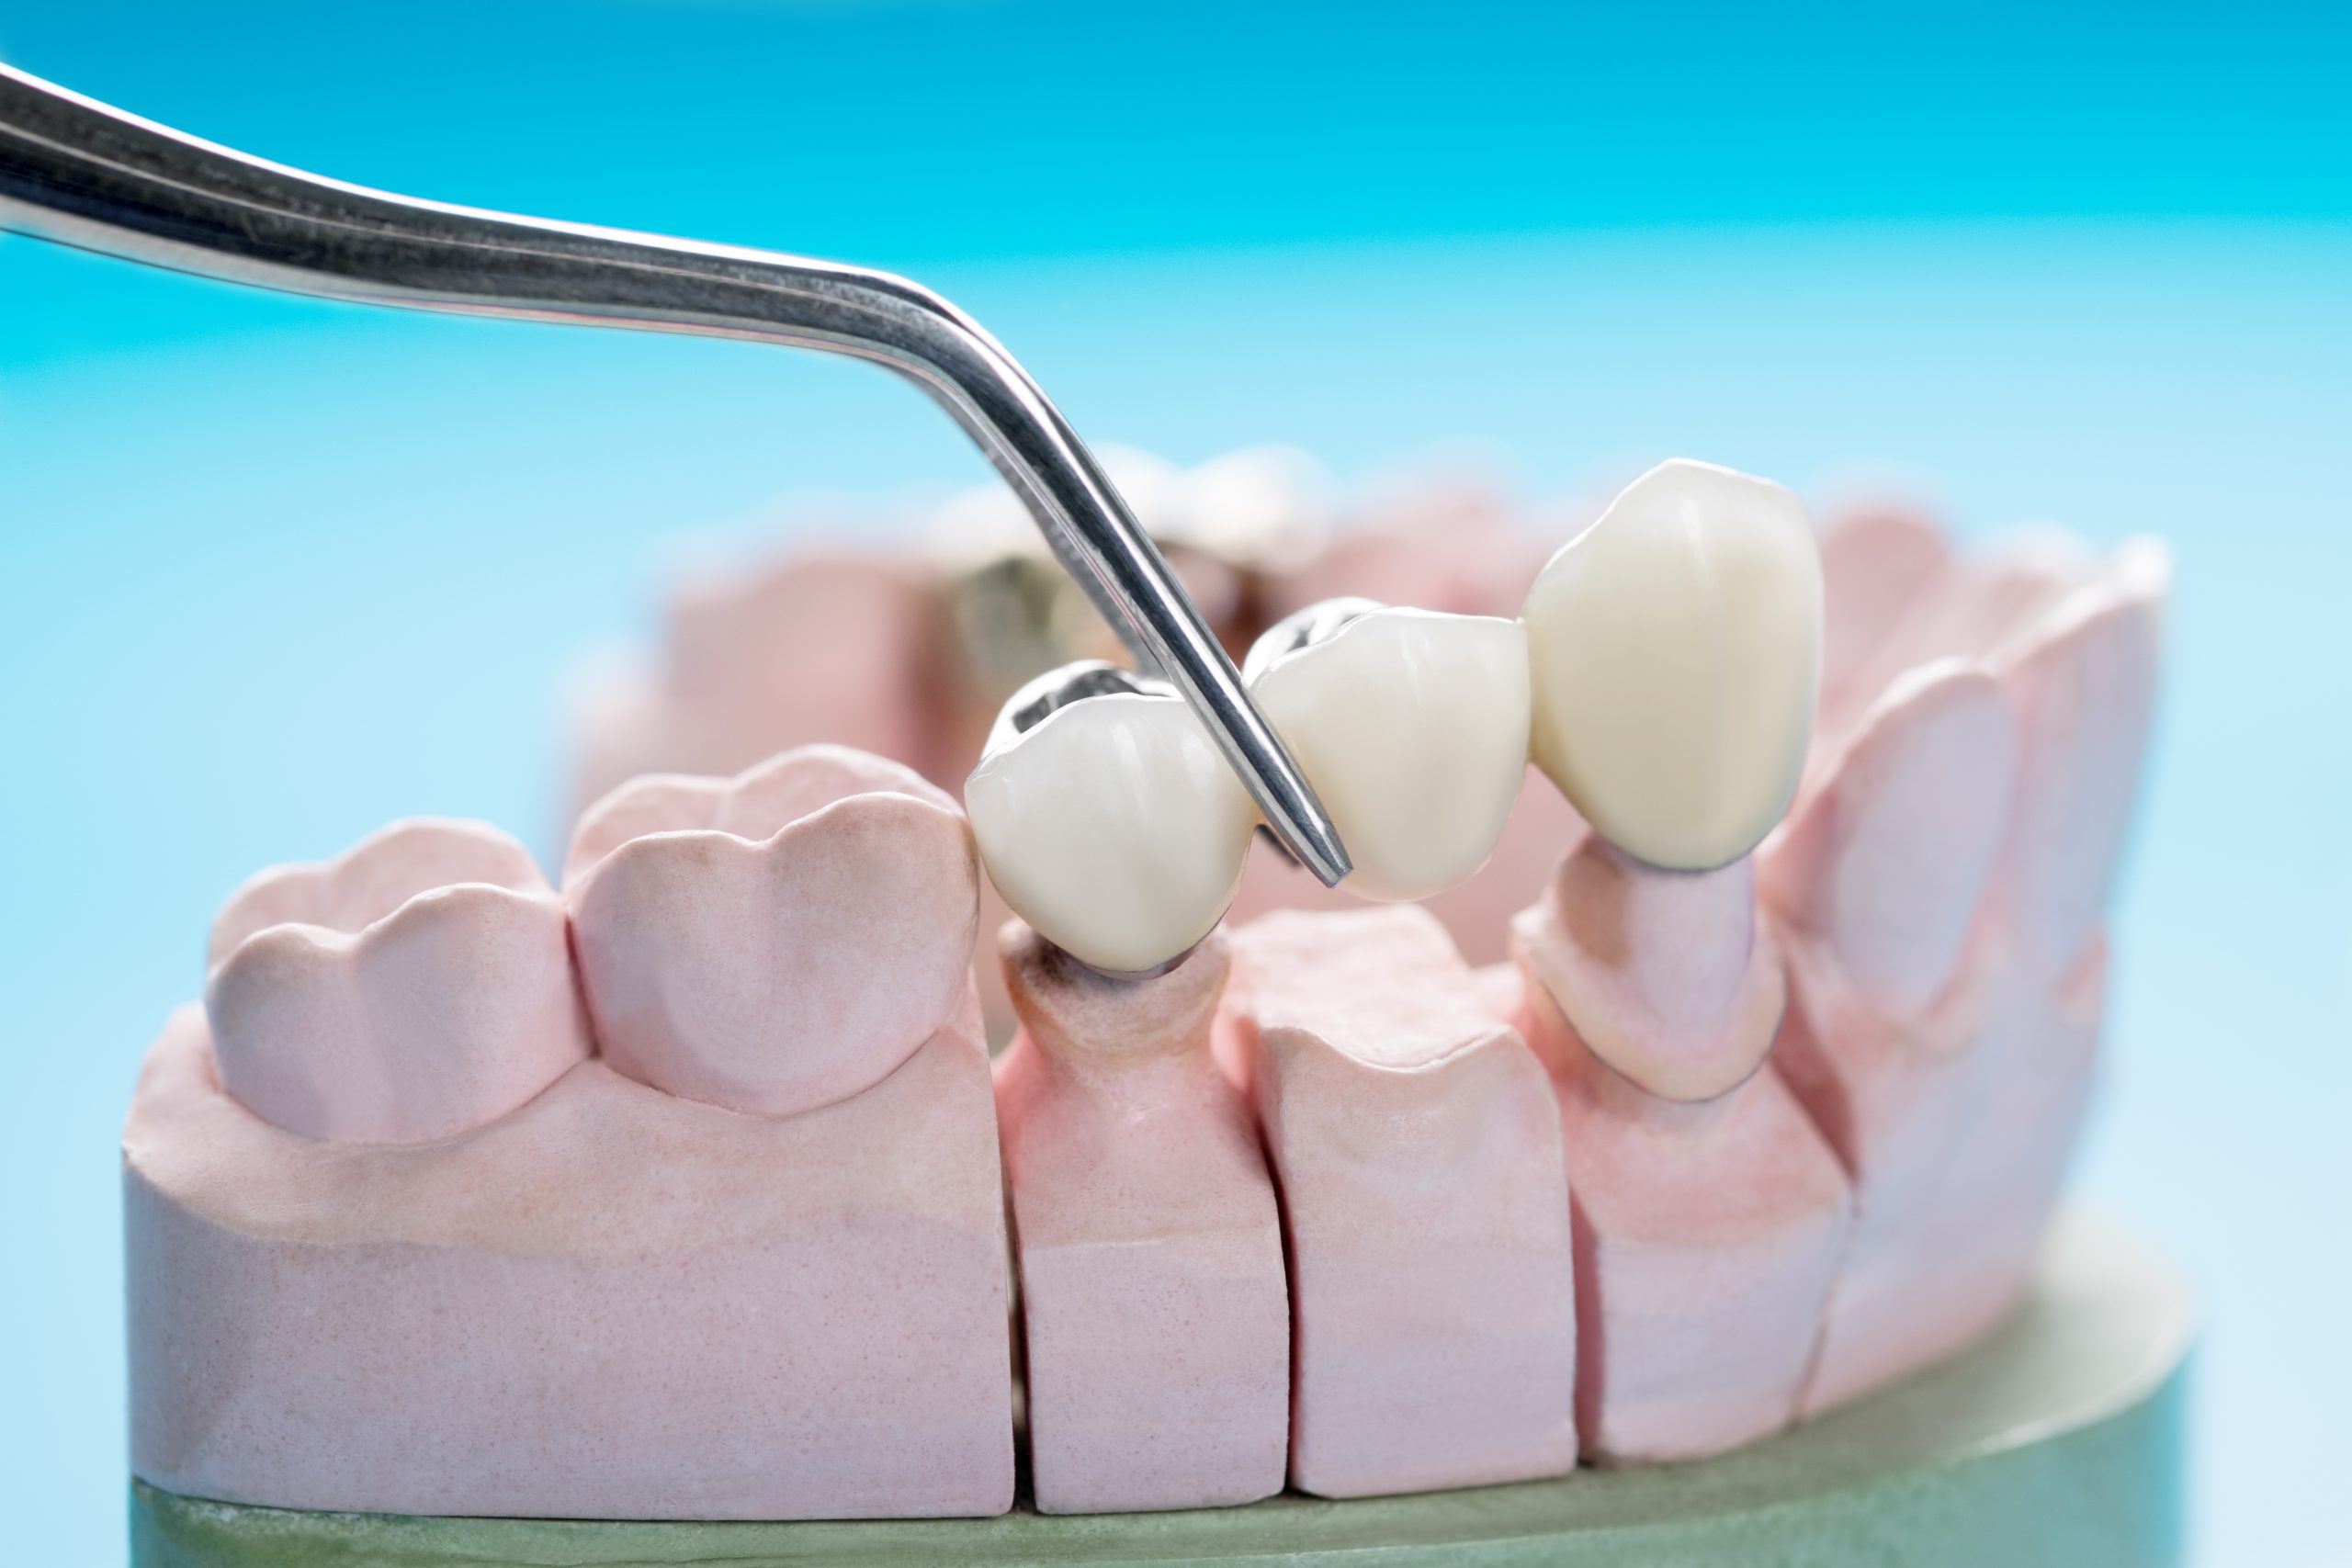 klinike dentare sherbimet